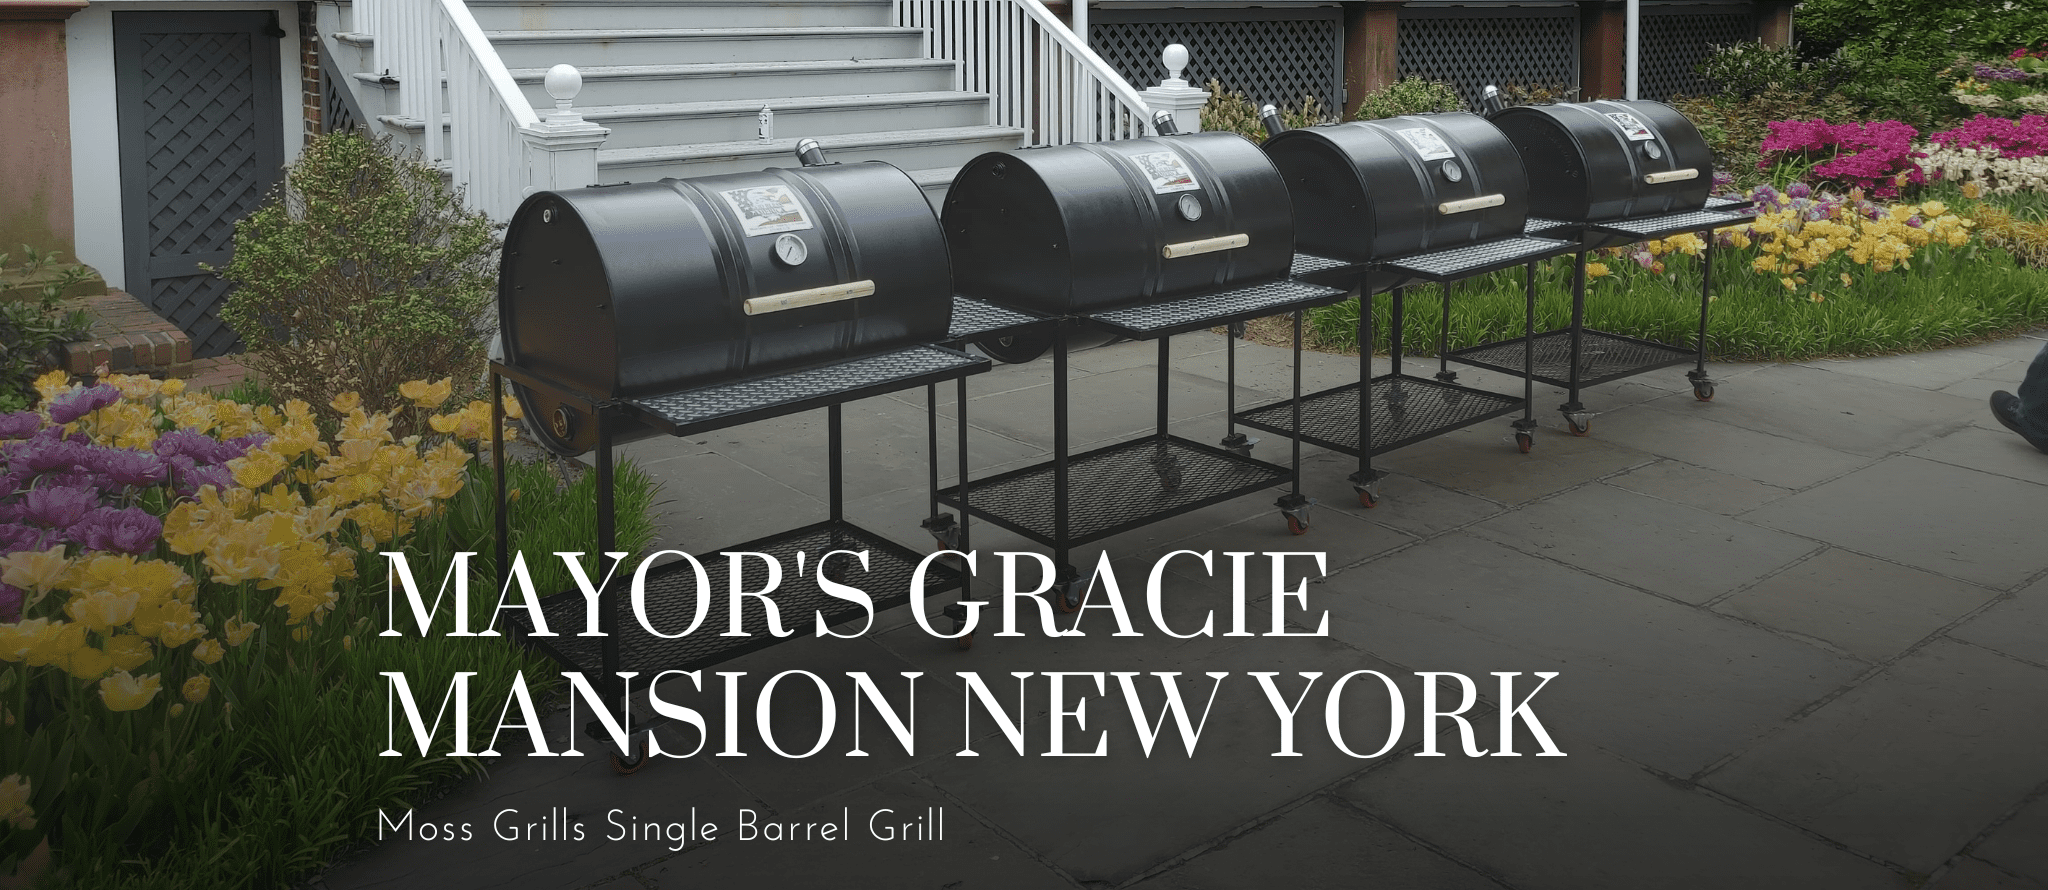 Mayors-Gracie-Mansion-New-York-1